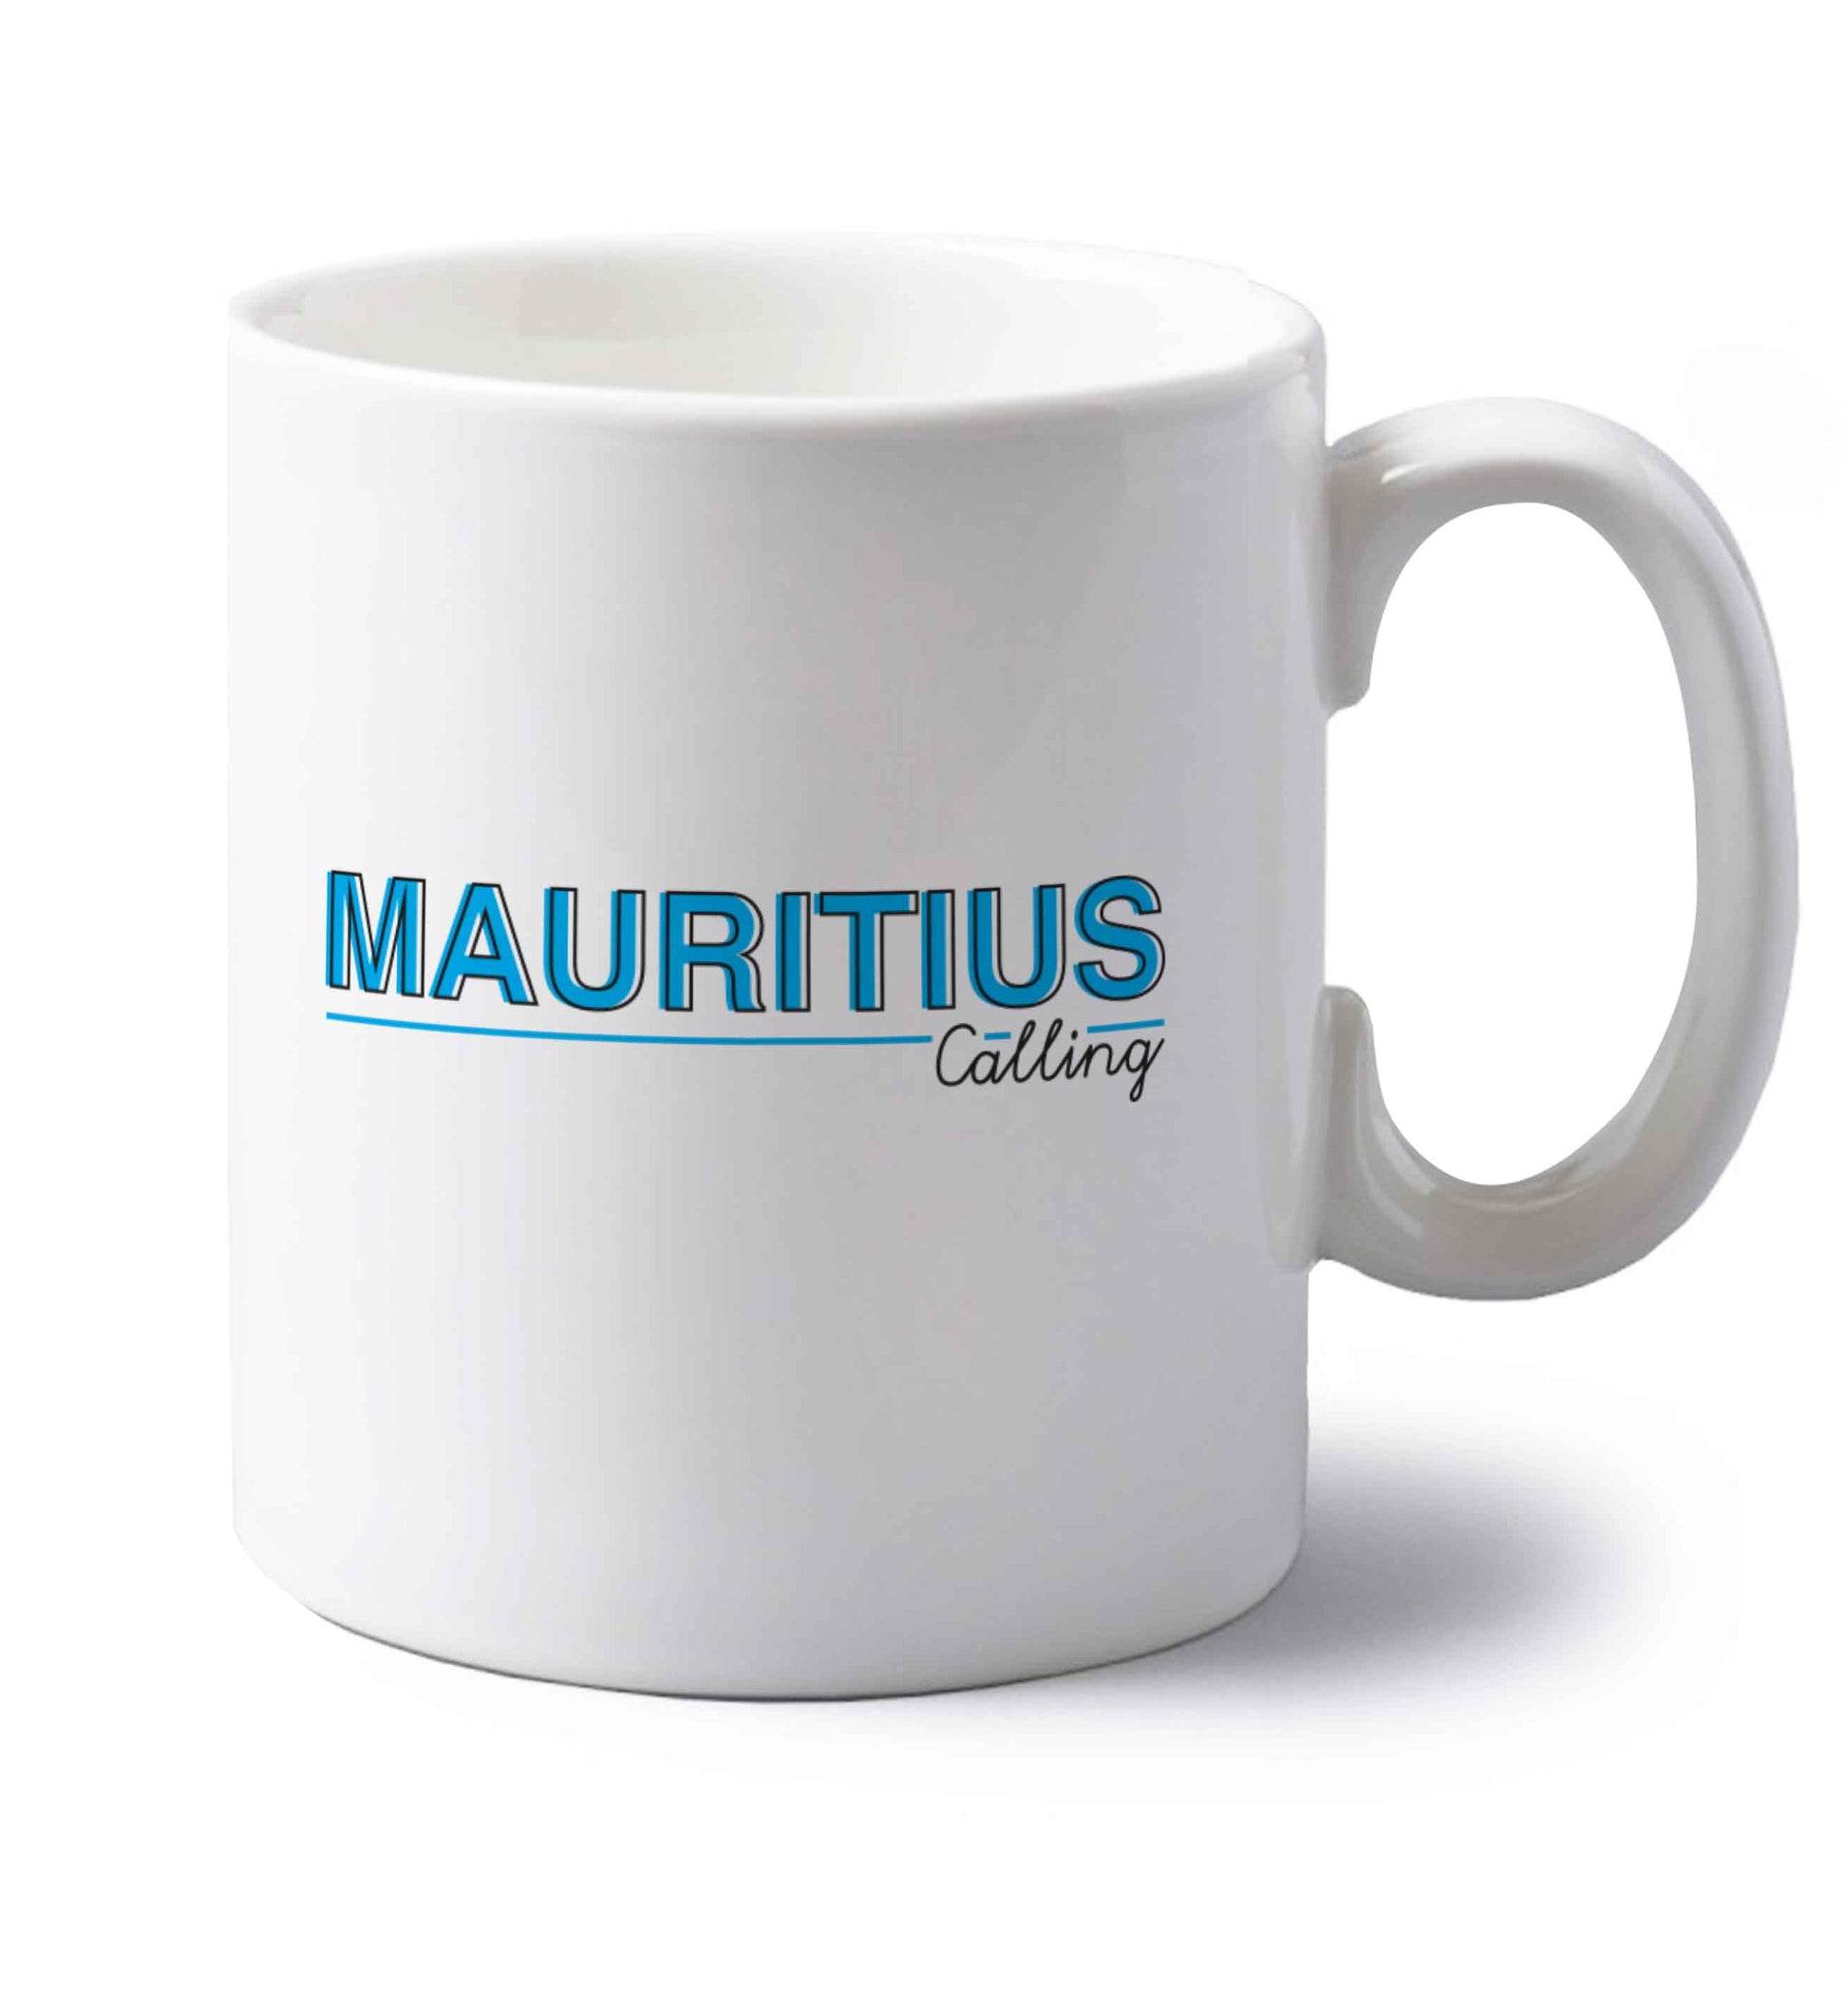 Mauritius calling left handed white ceramic mug 